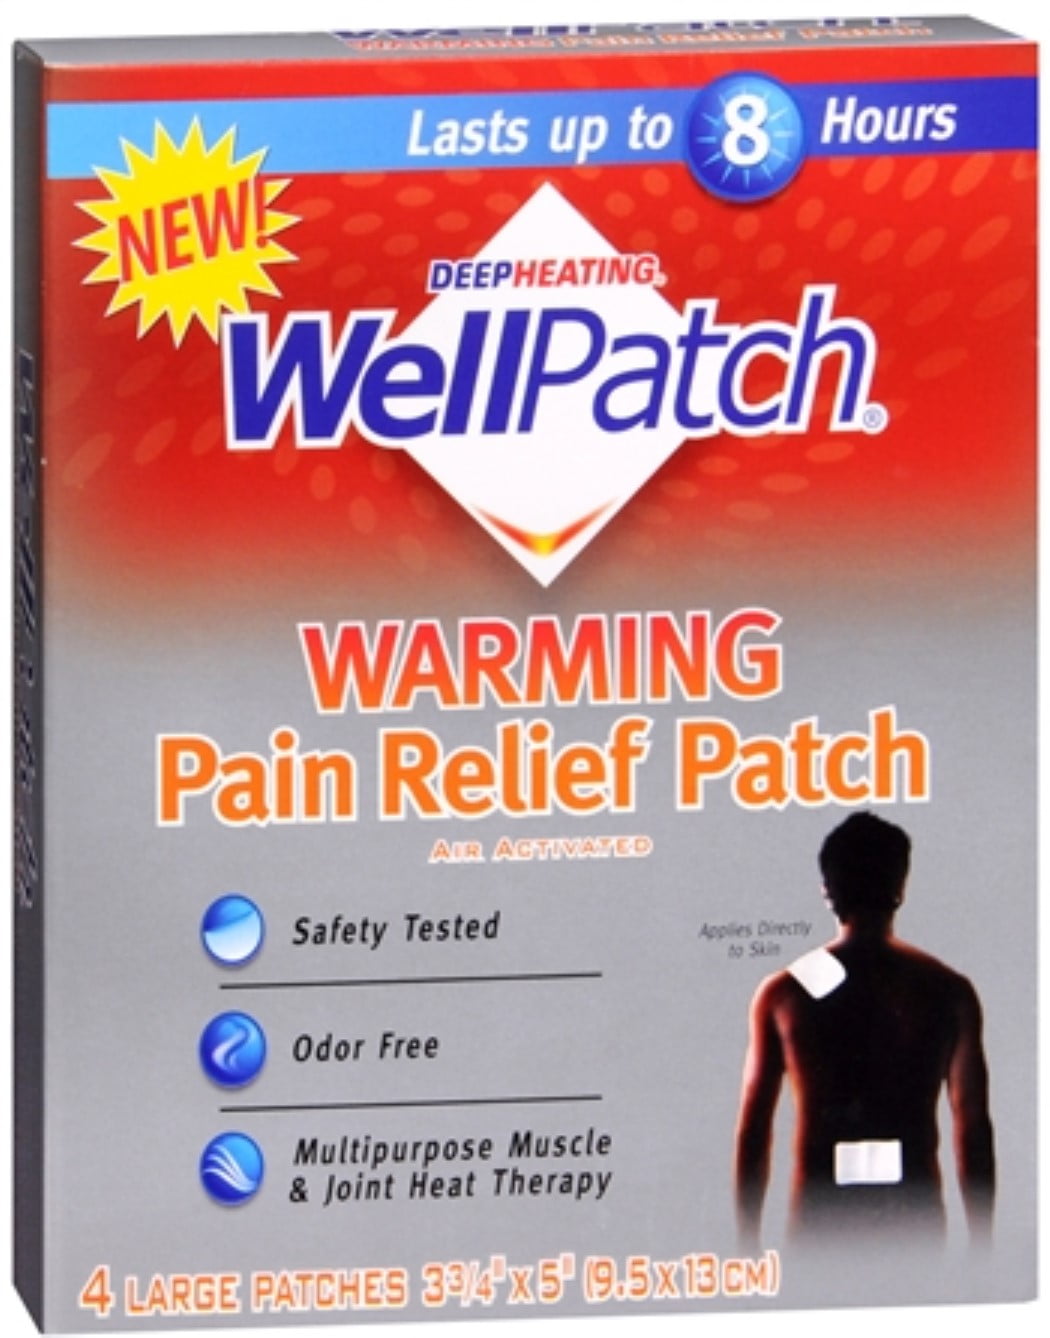 WELLPATCH WARMING PAIN RELIEF- capsaicin patch